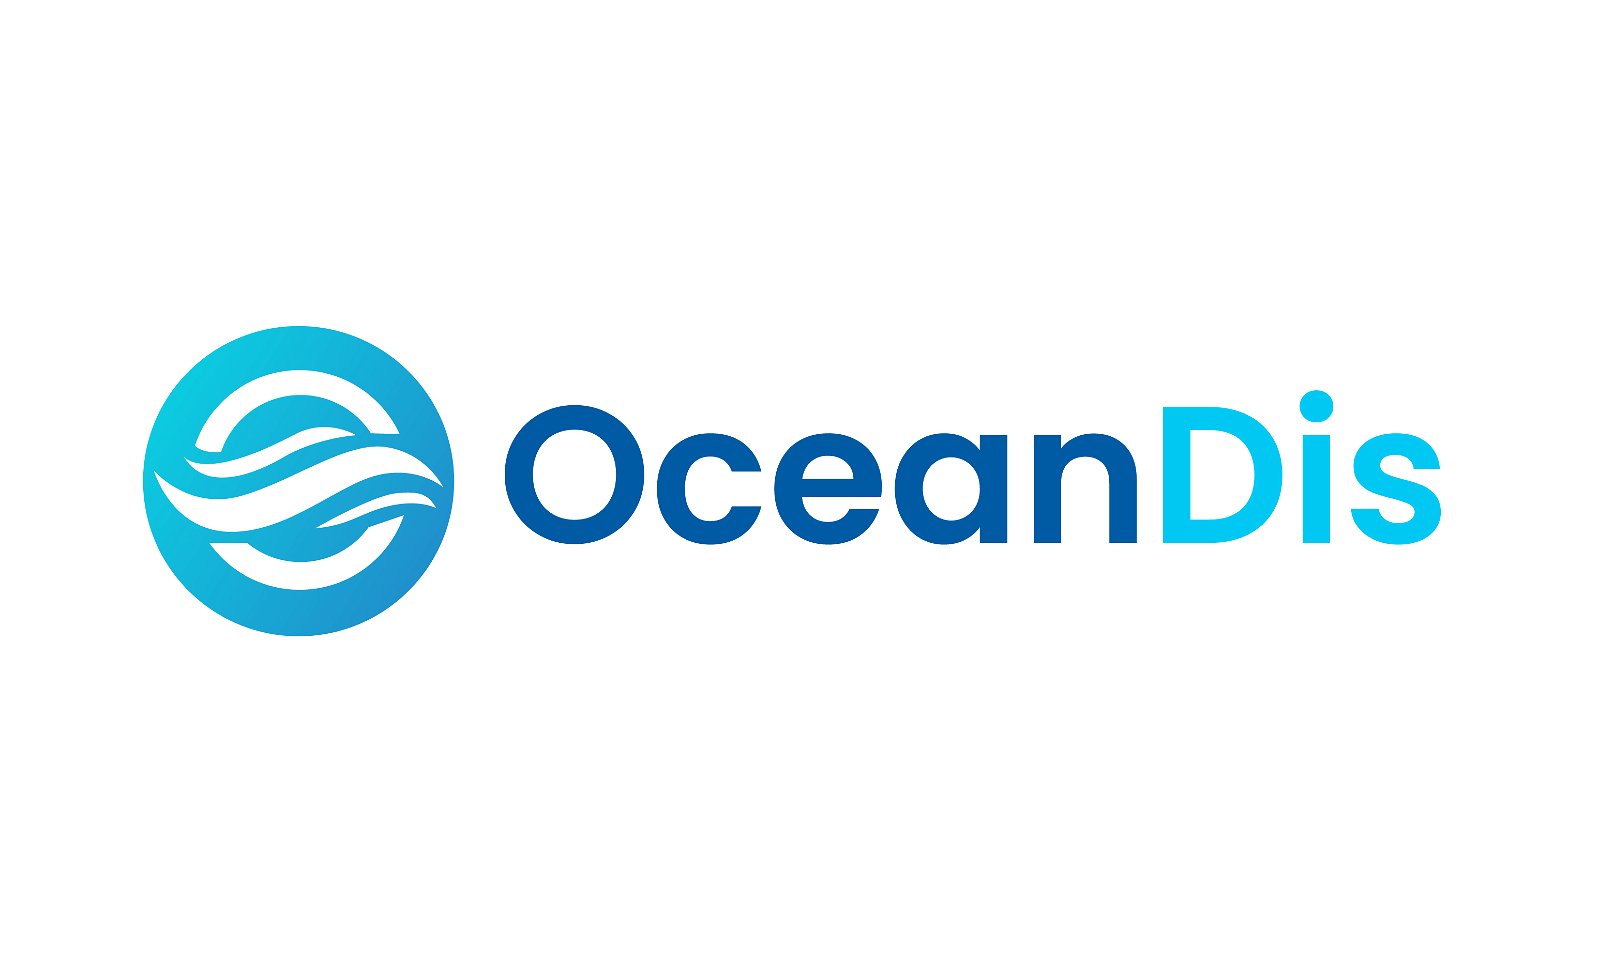 OceanDis.com - Creative brandable domain for sale